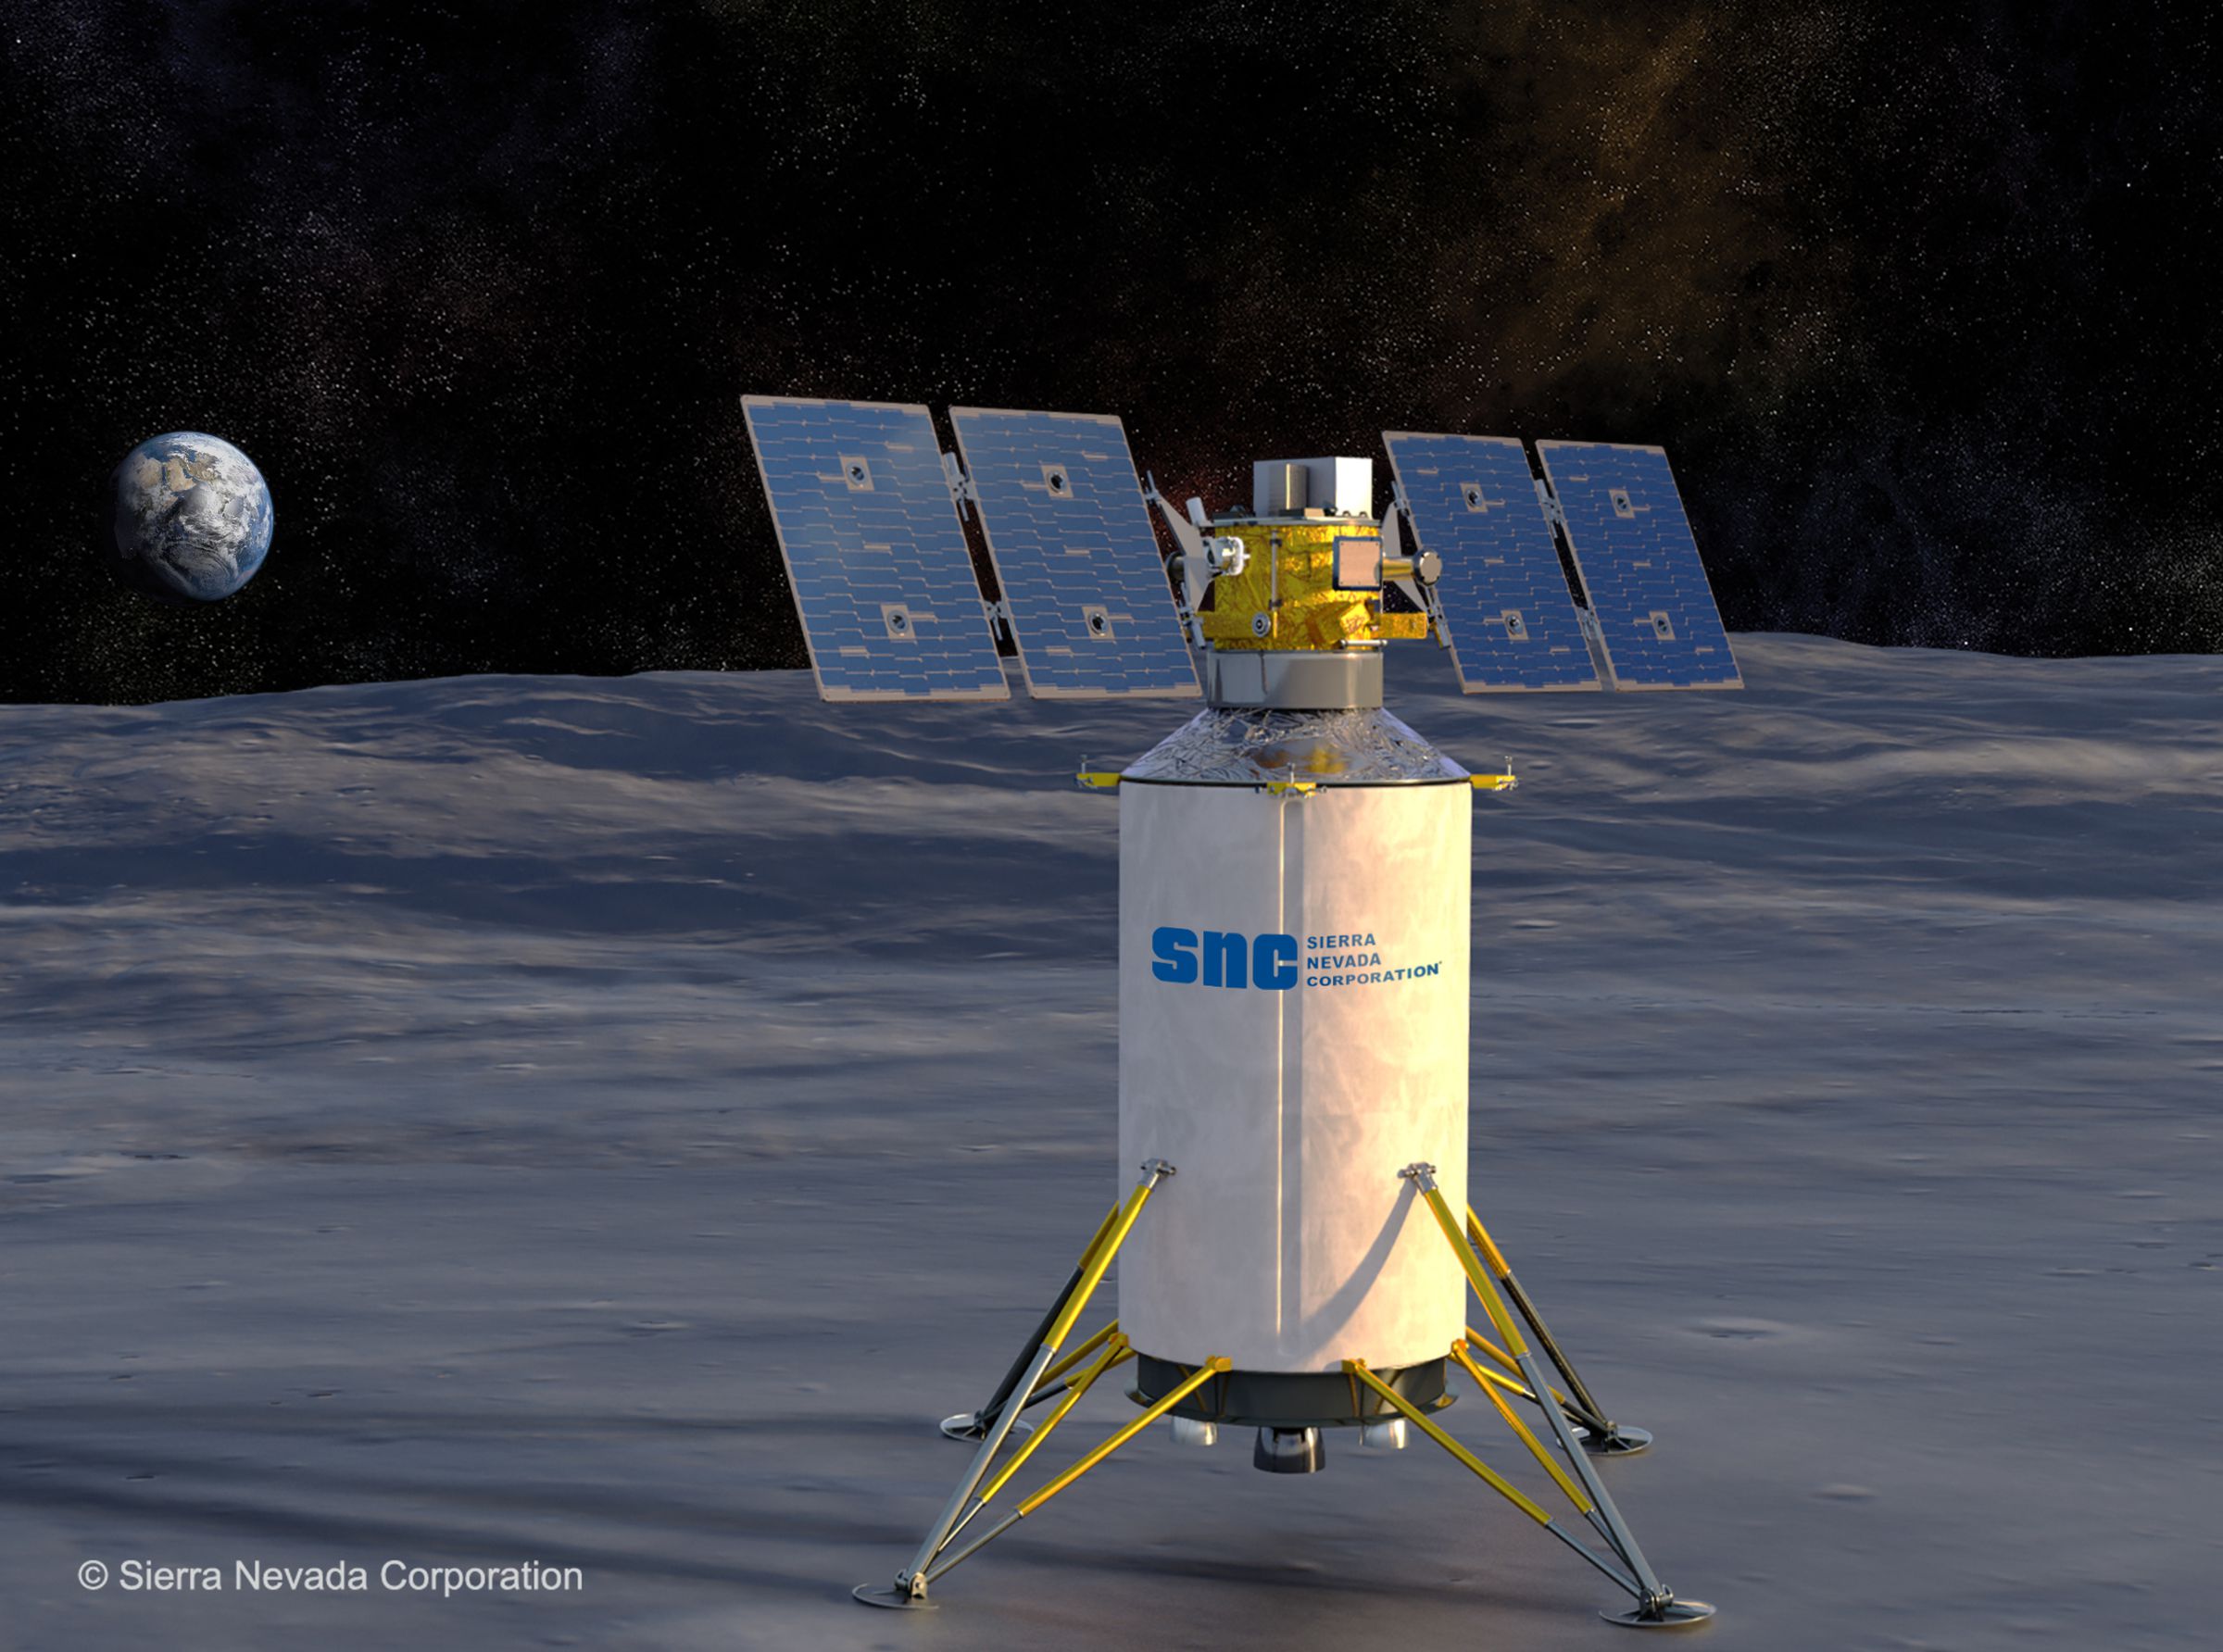 An artistic rendering of Sierra Nevada Corporation’s lander